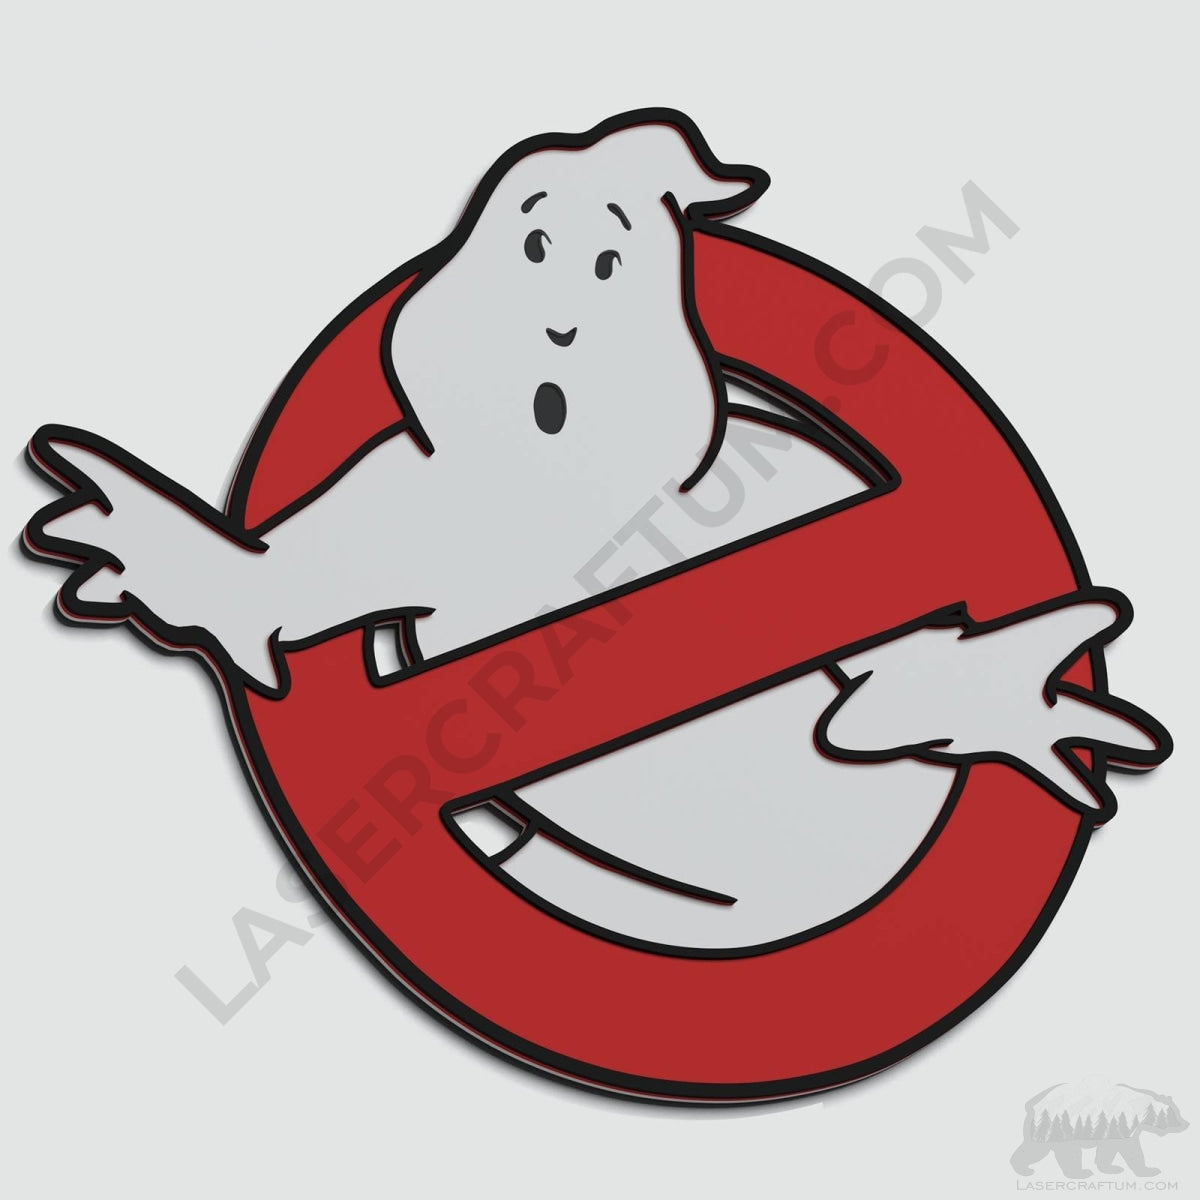 Ghostbusters Logo Layered Design for cutting - LaserCraftum